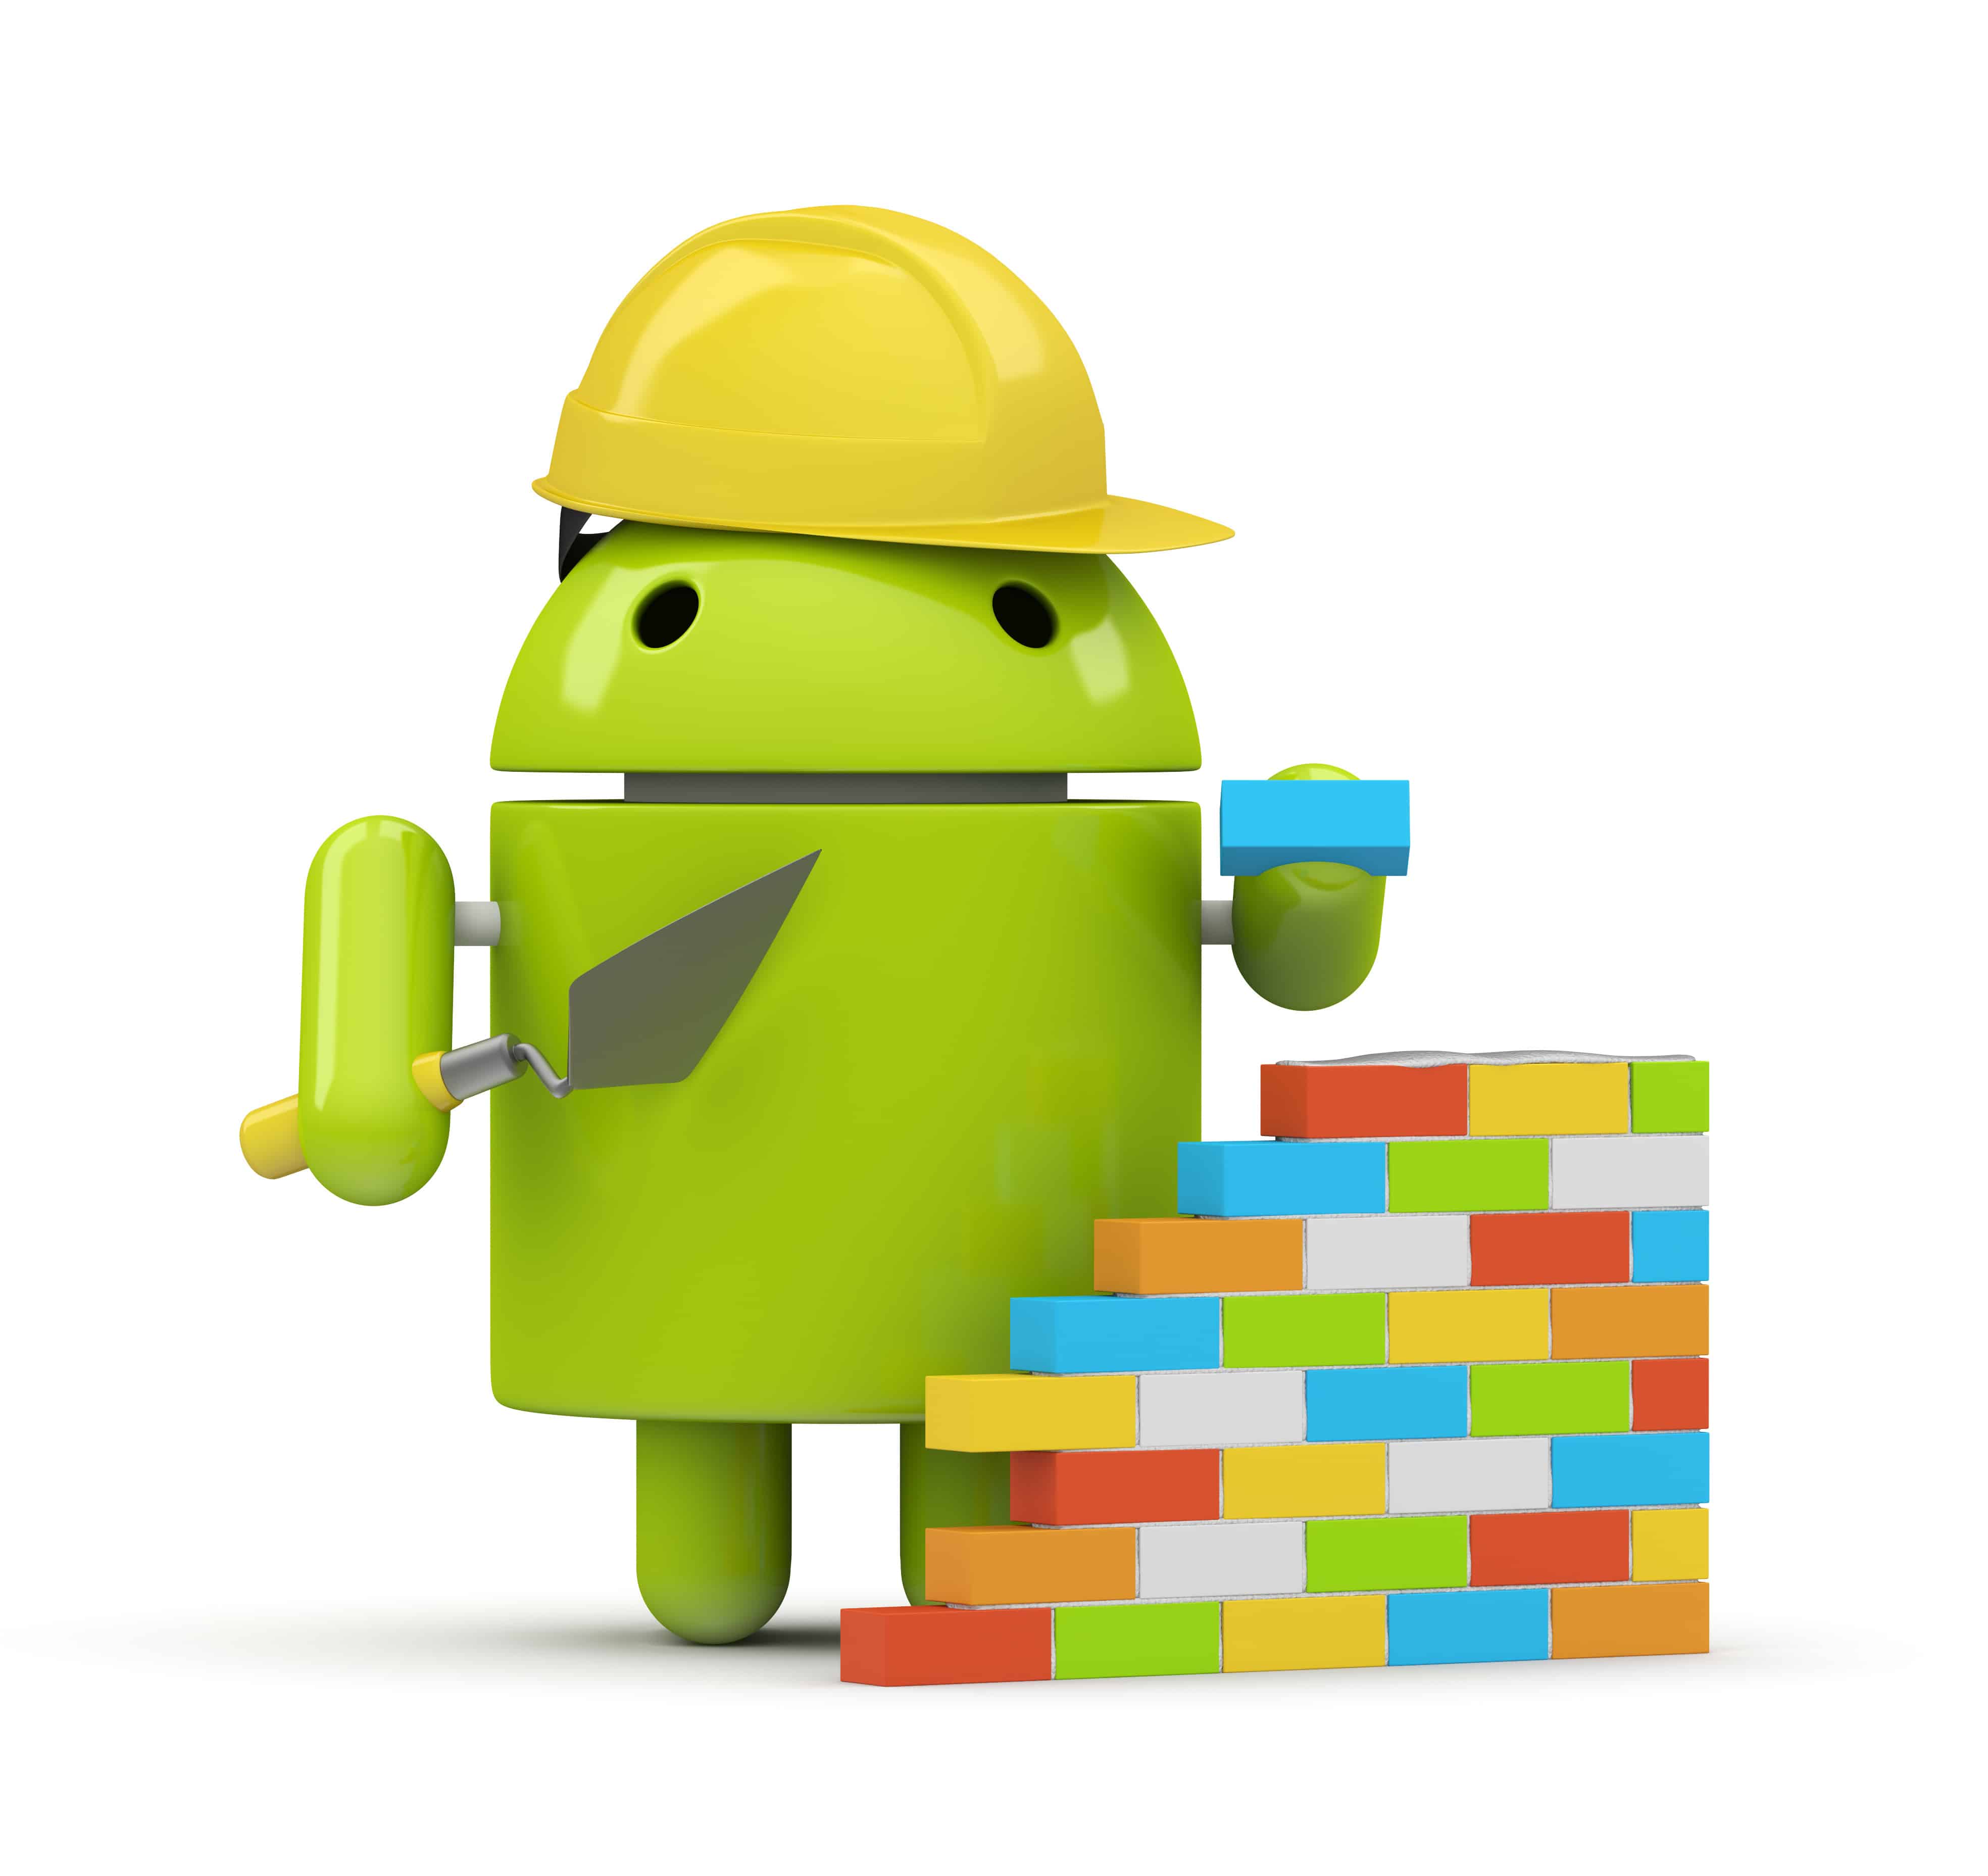 Android build type. Андроид персонаж. Логотип робот Android. Смайлик робот андроид. Android ads.